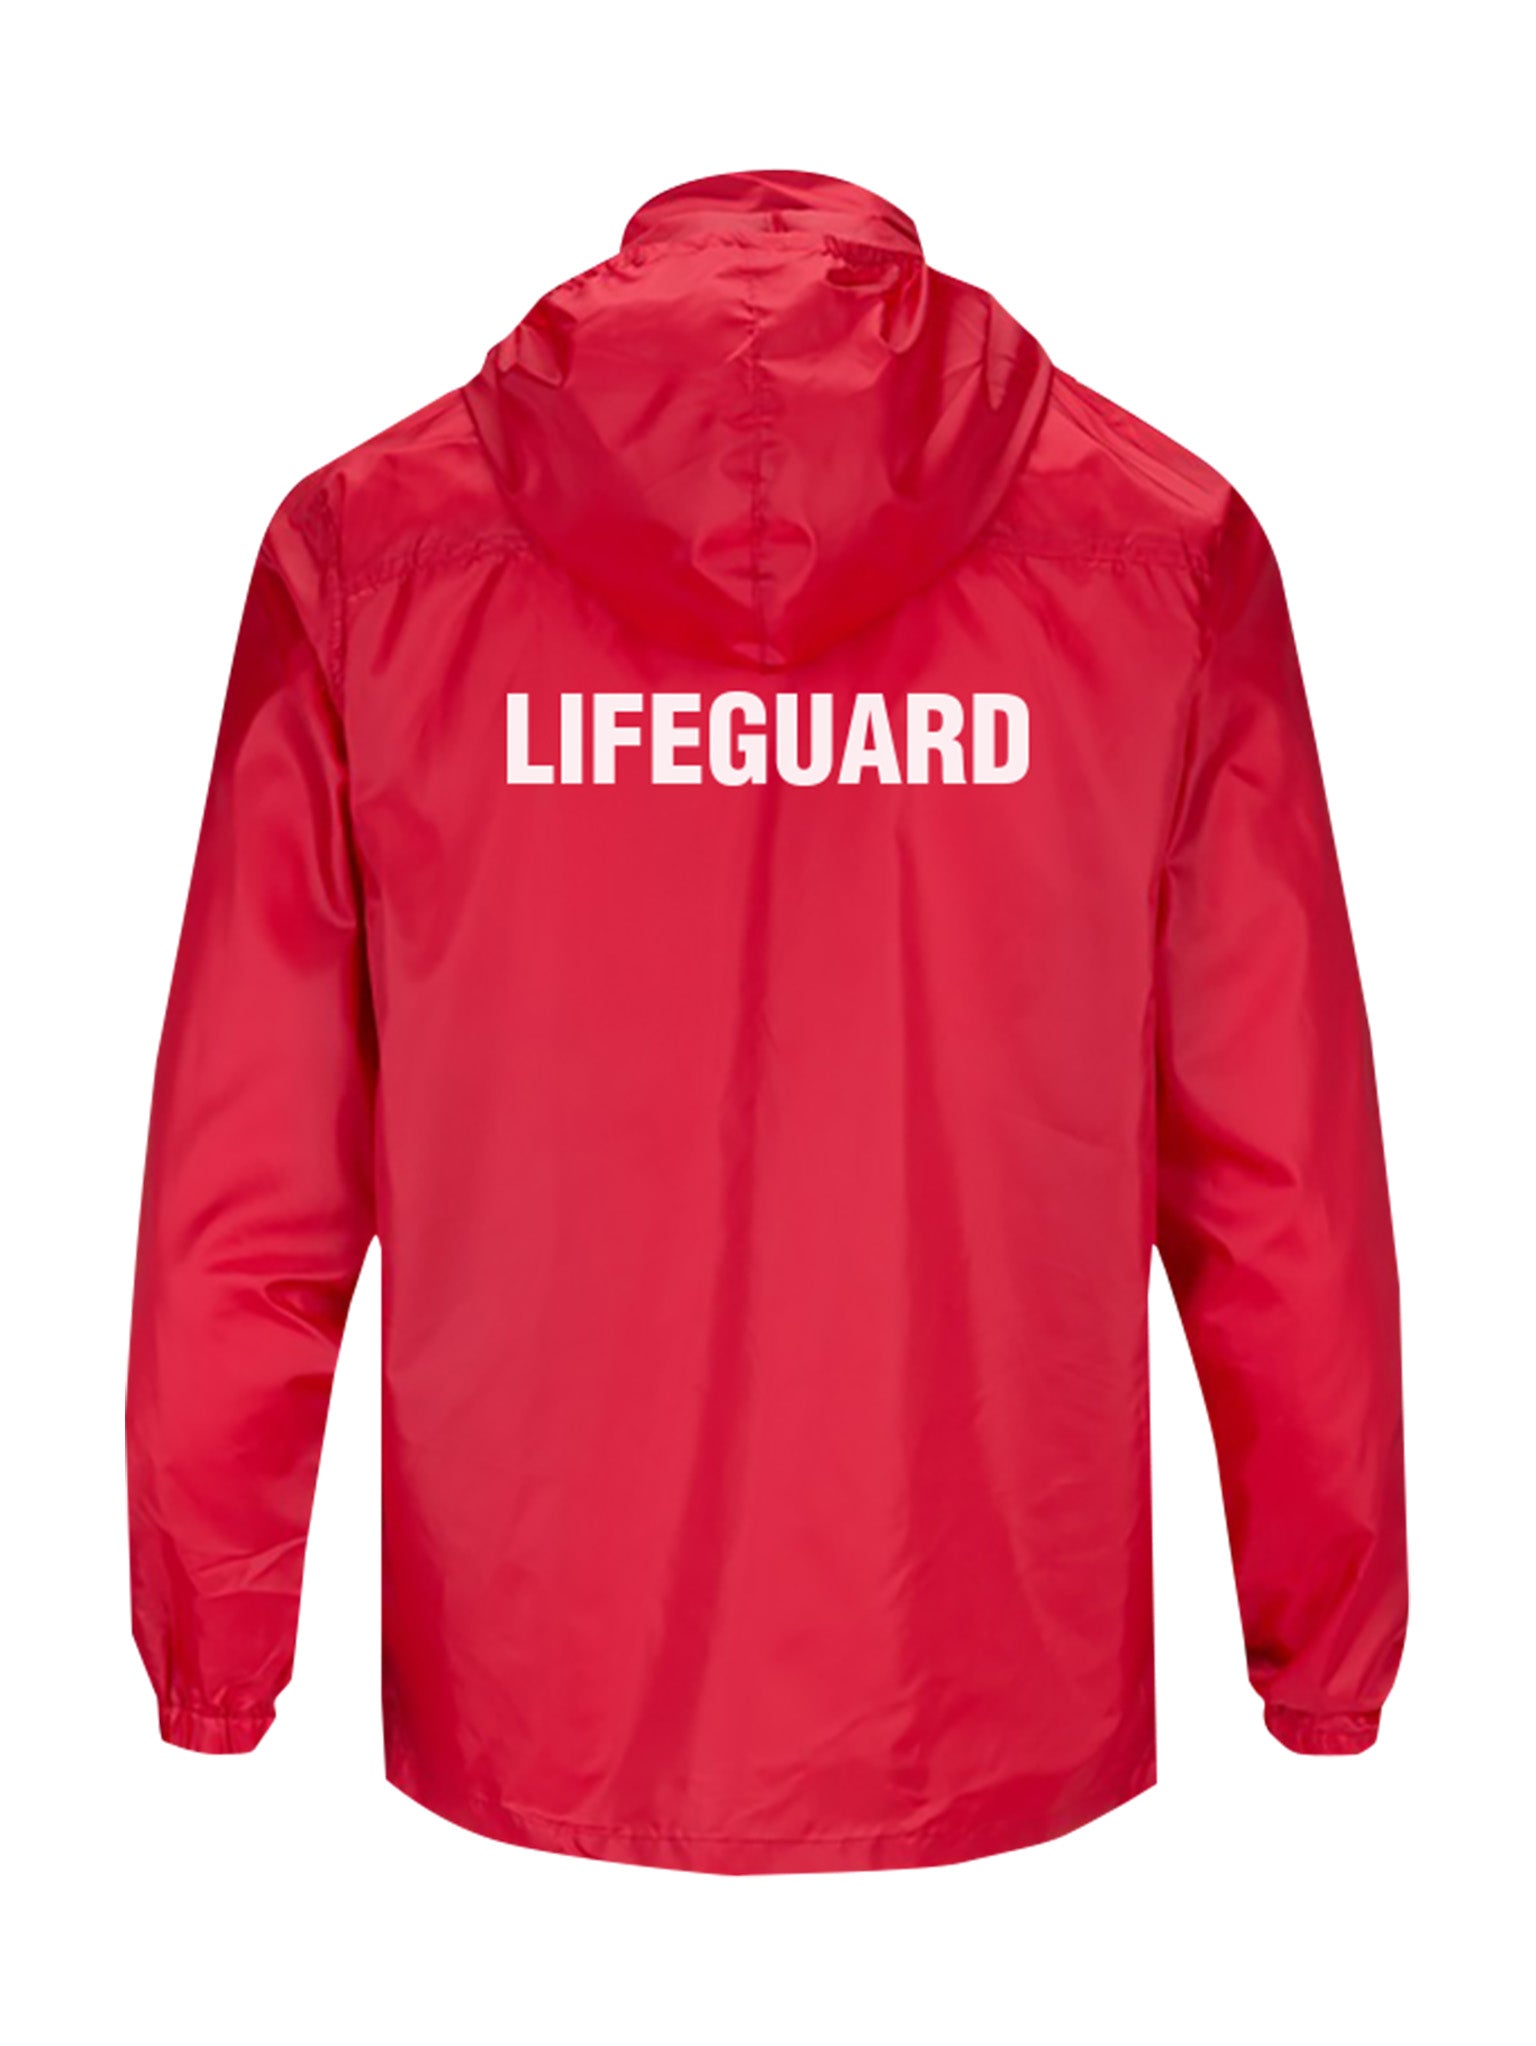 Lifeguard Windbreaker - Red